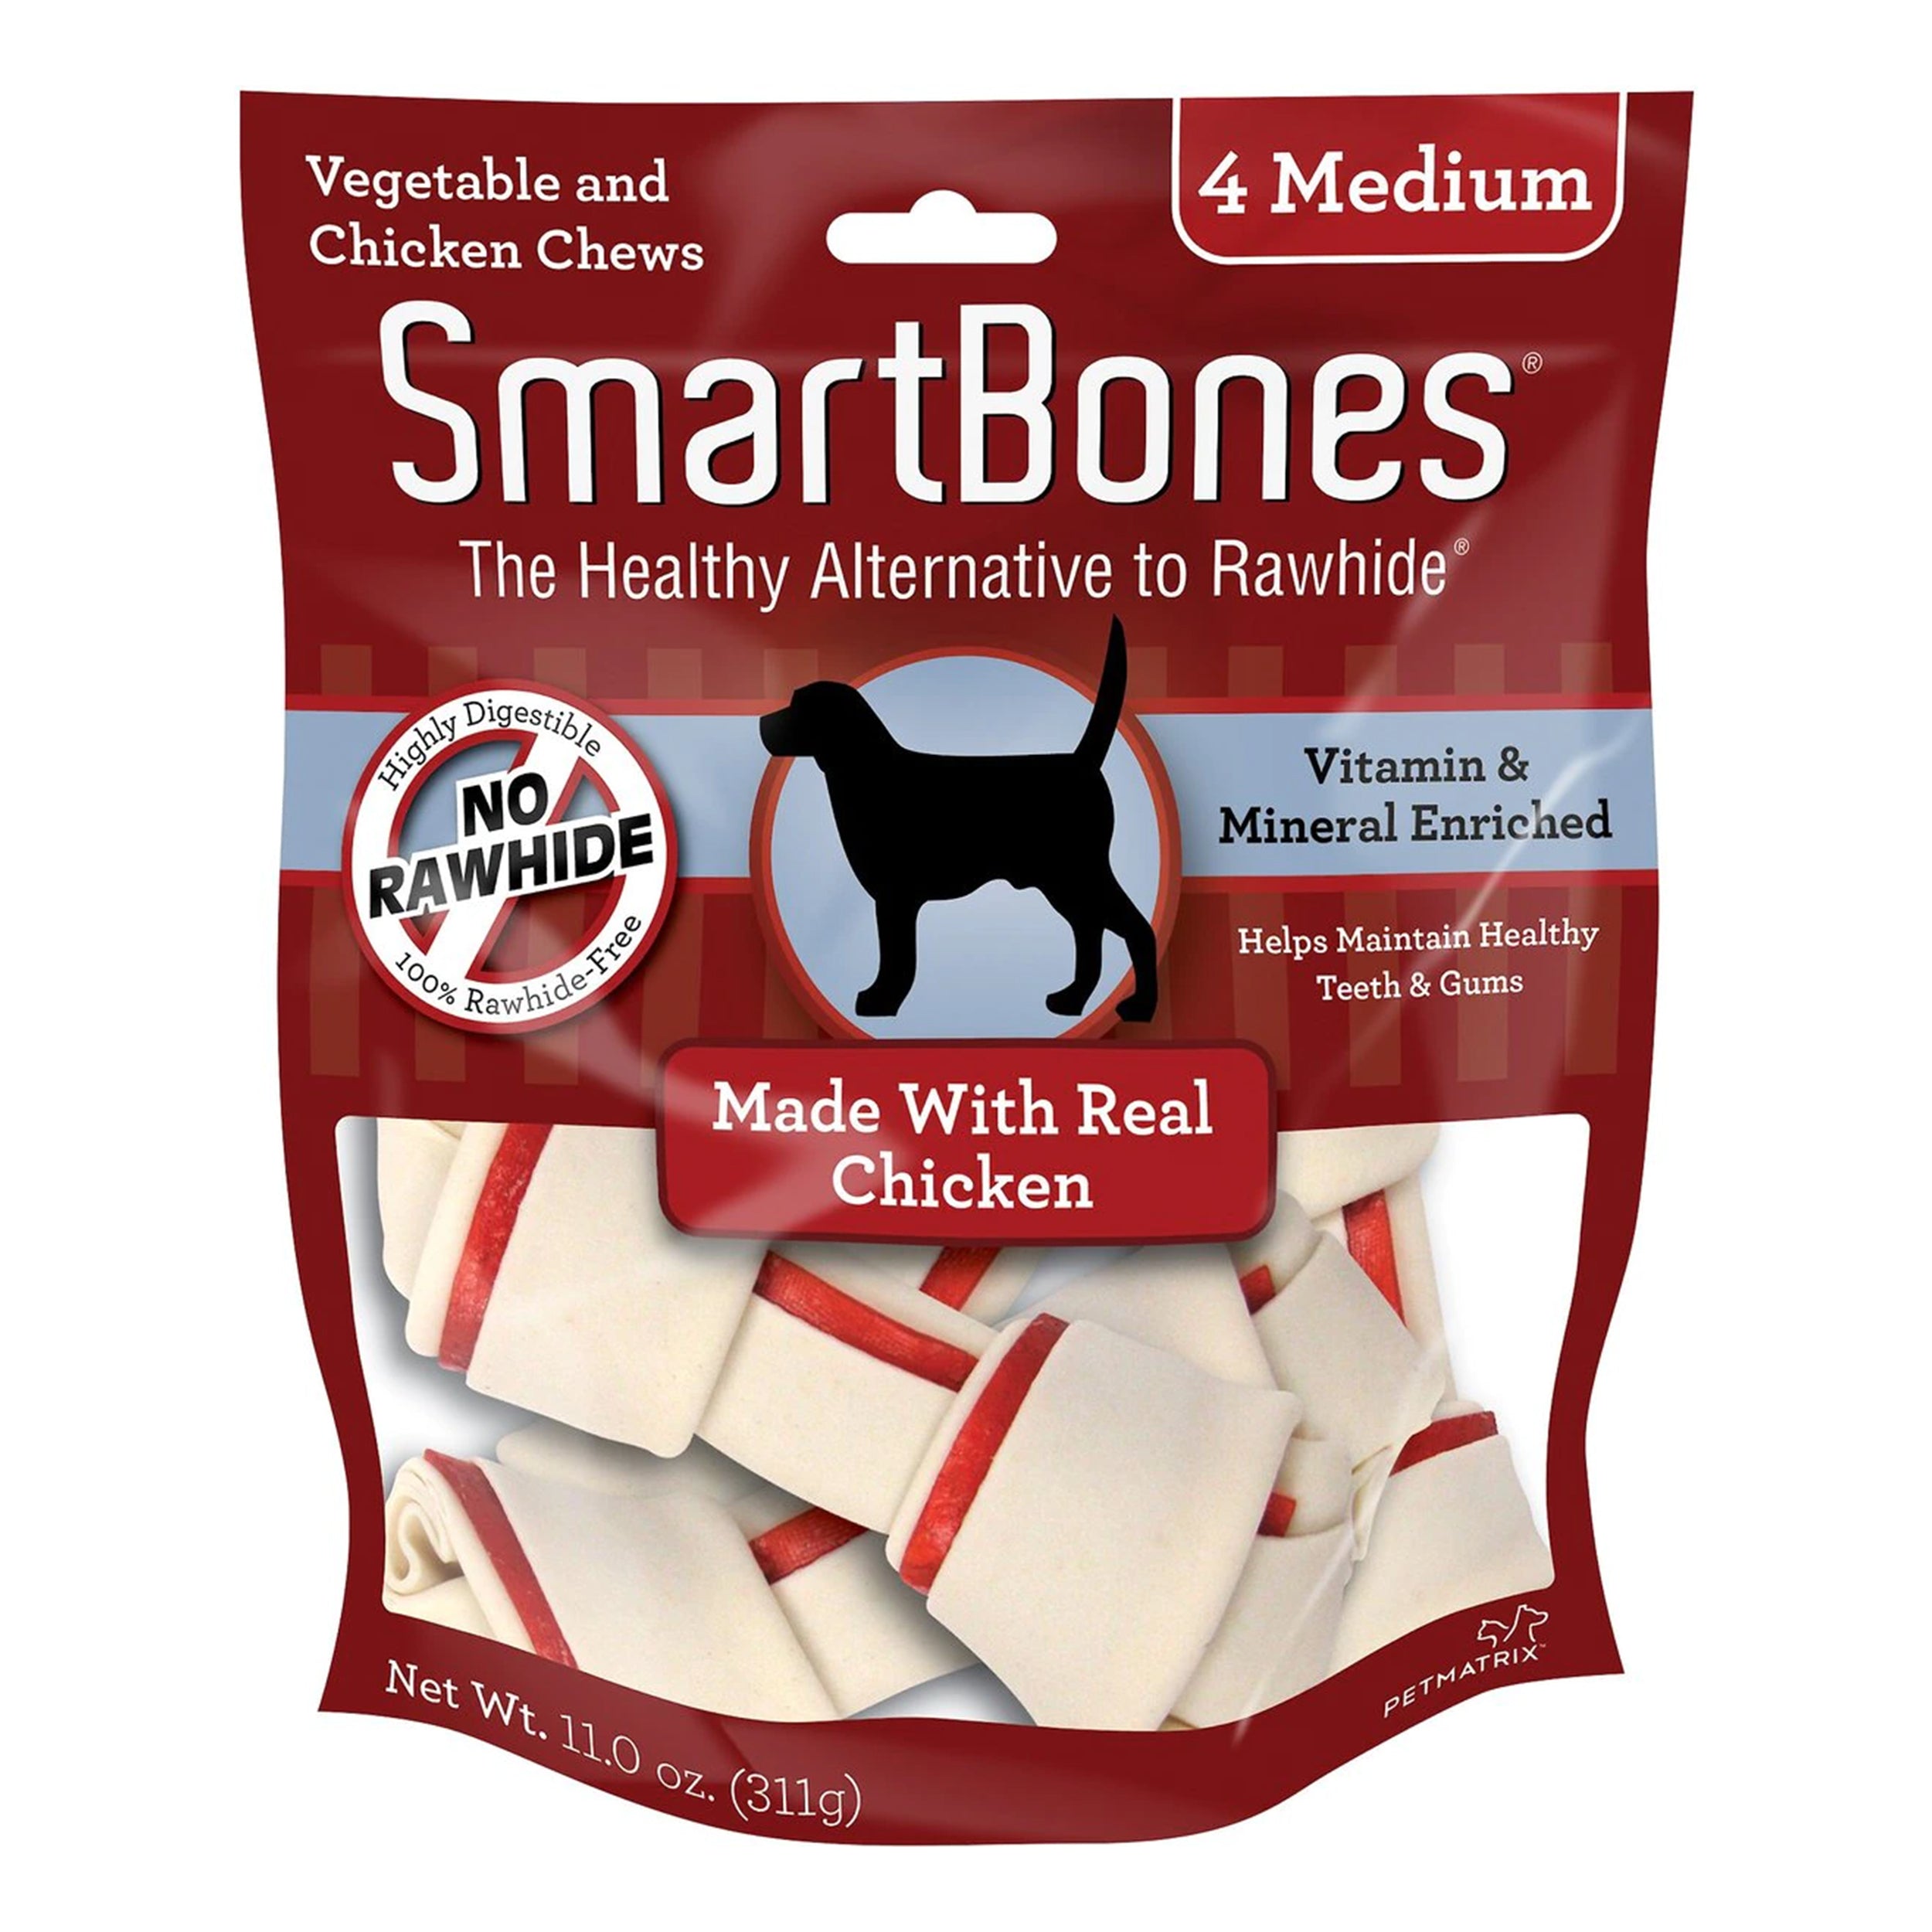 SmartBones Medium Chicken Chew Bones Dog Treats, 4 Count